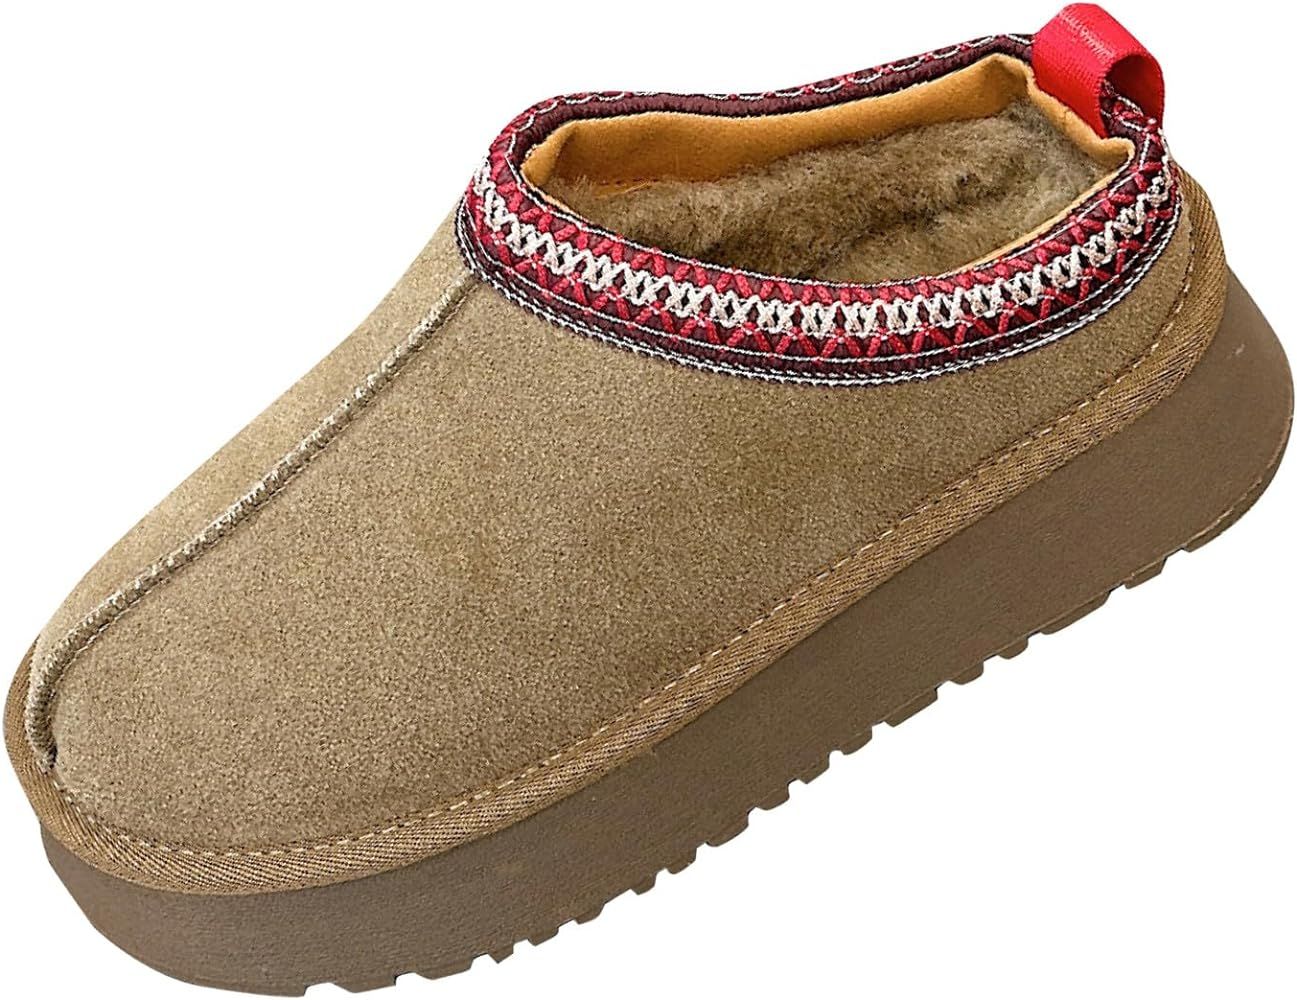 Women's Slippers Platform Mini Boots Ankle Short Boot Tasman Slippers Slip on Fur Fleece Lined Tasma | Amazon (US)